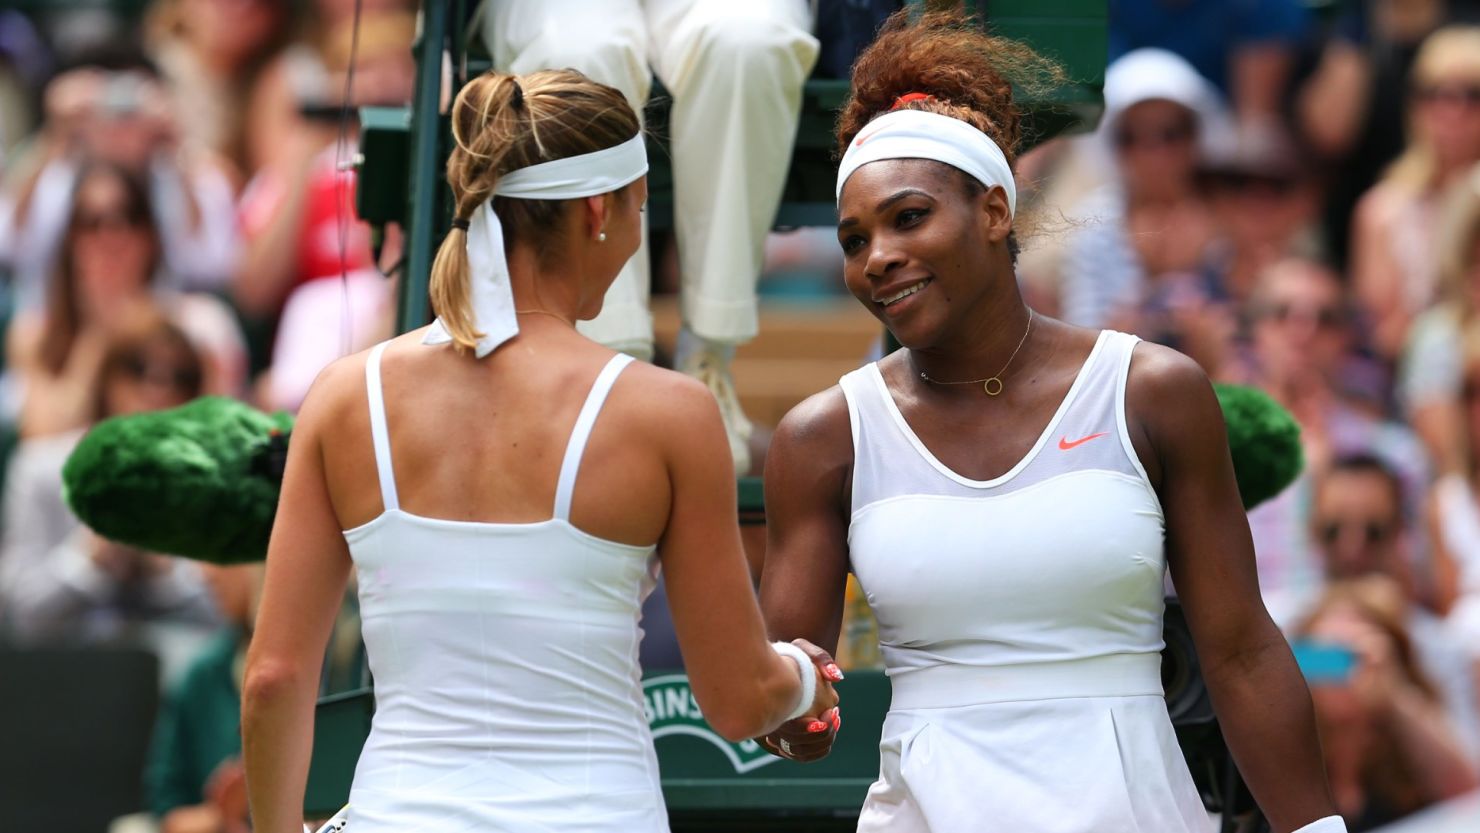 Williams will create the longest unbeaten run in women's tennis if she reaches the quarterfinals at Wimbledon.